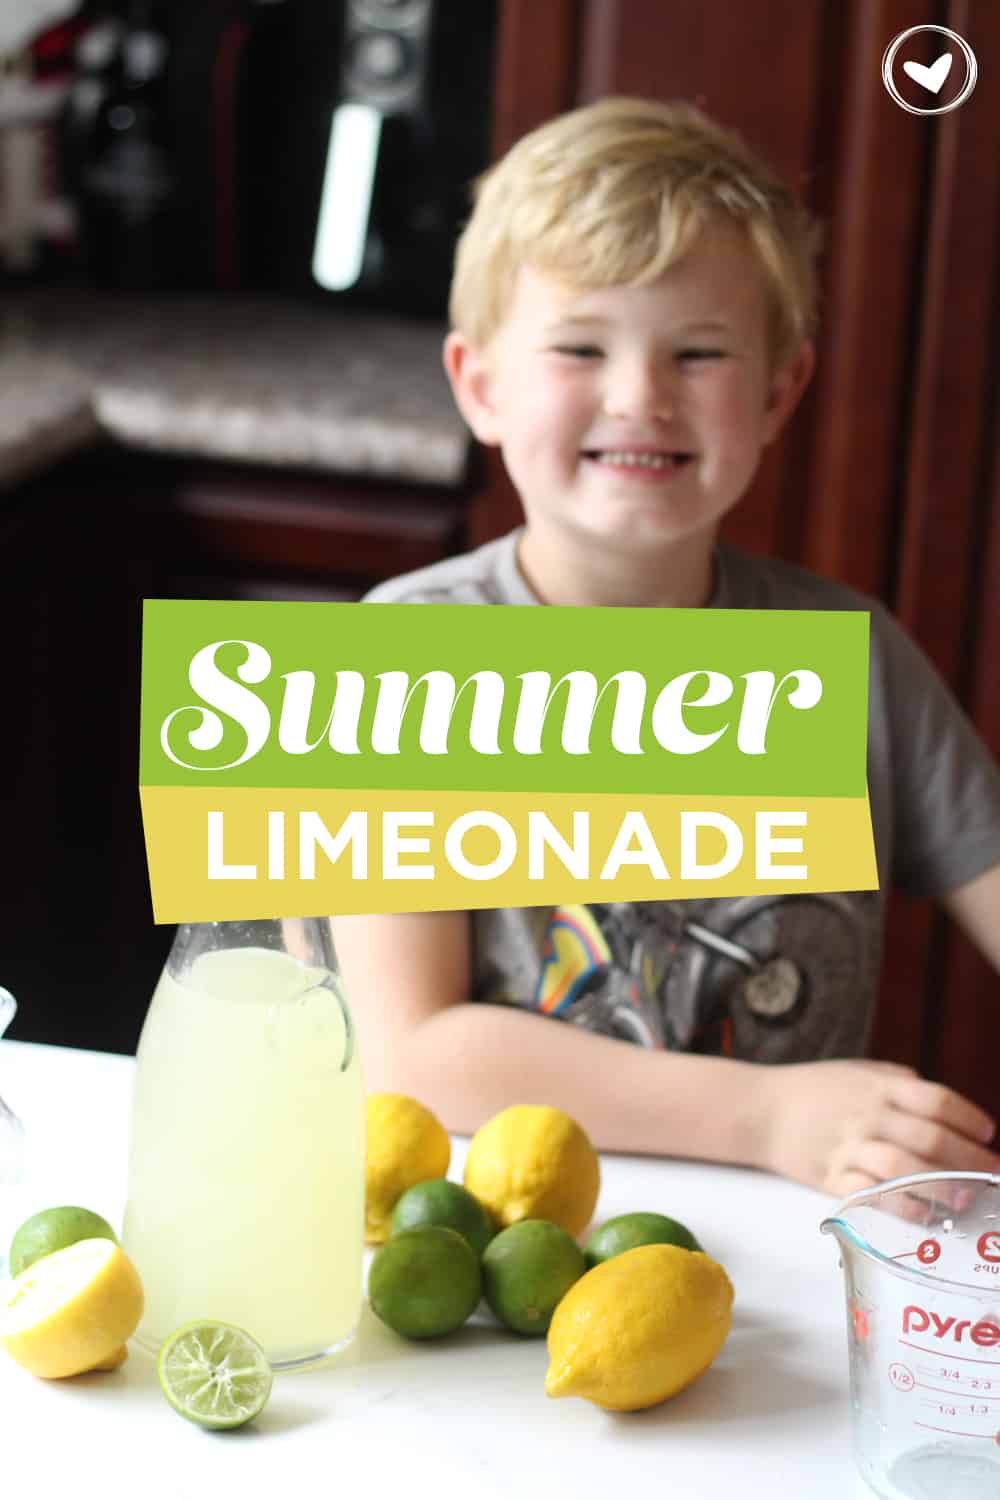 Summertime Limeonade